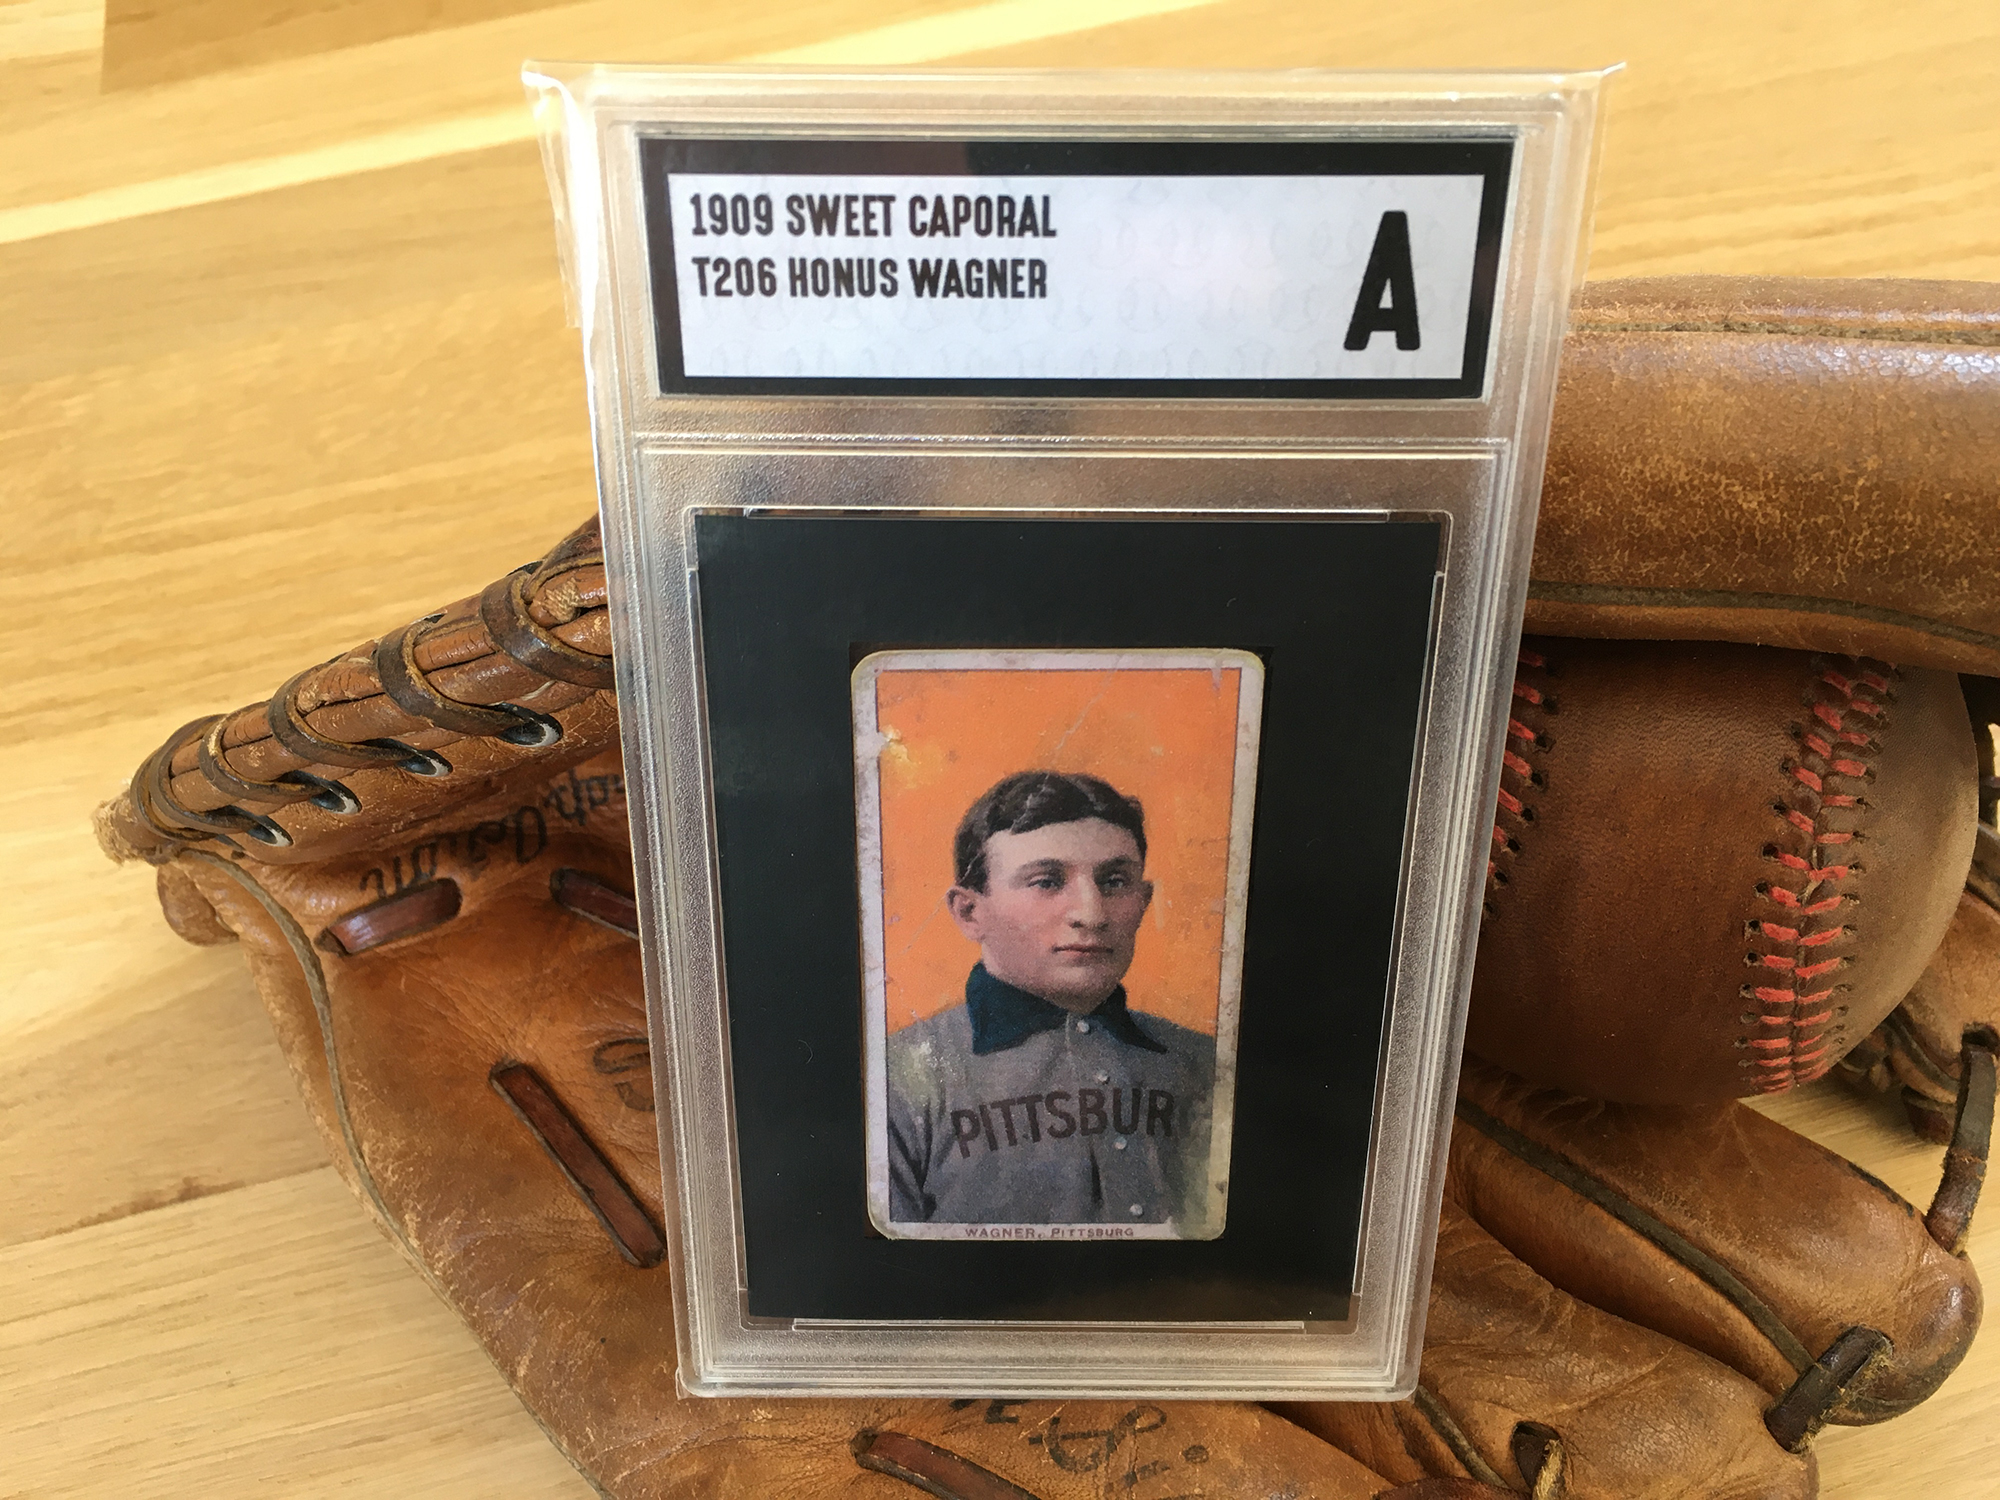 HONUS Wagner TOP LOADER T206 Sweet Caporal 1910 Baseball card Vintage aged  REPRINT REPRO - khristore